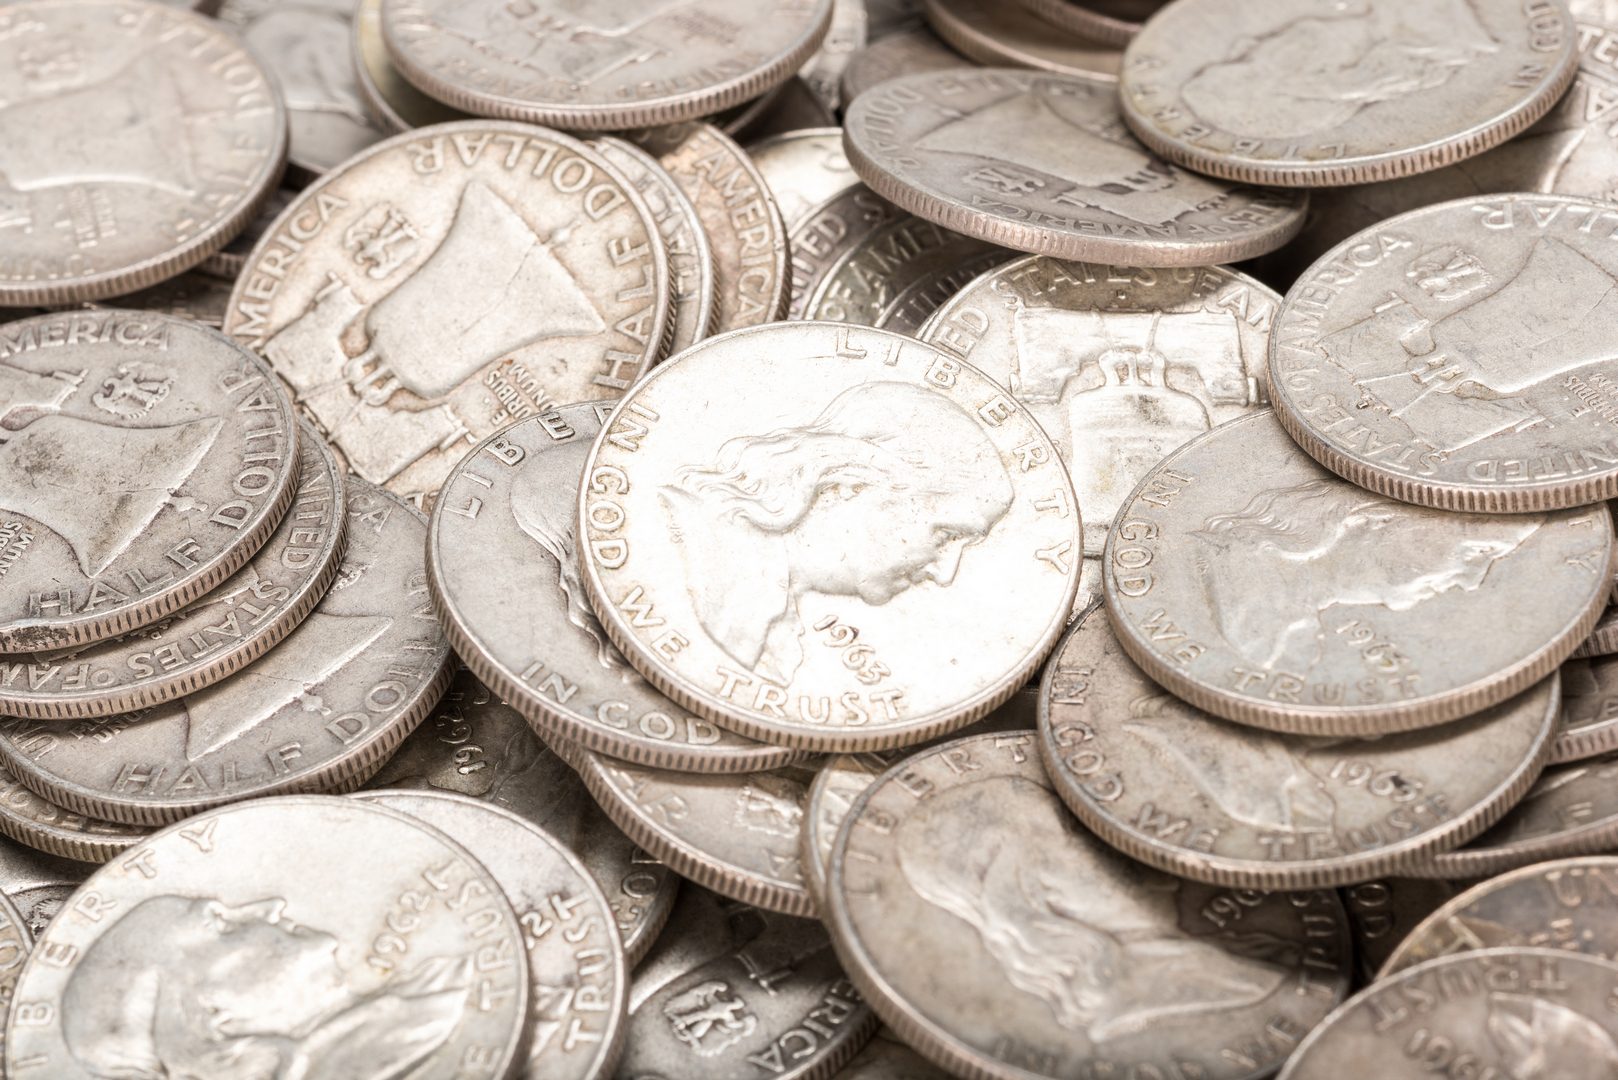 Lot 891: 116 U.S. Benjamin Franklin Silver Half Dollars (1950-1963)